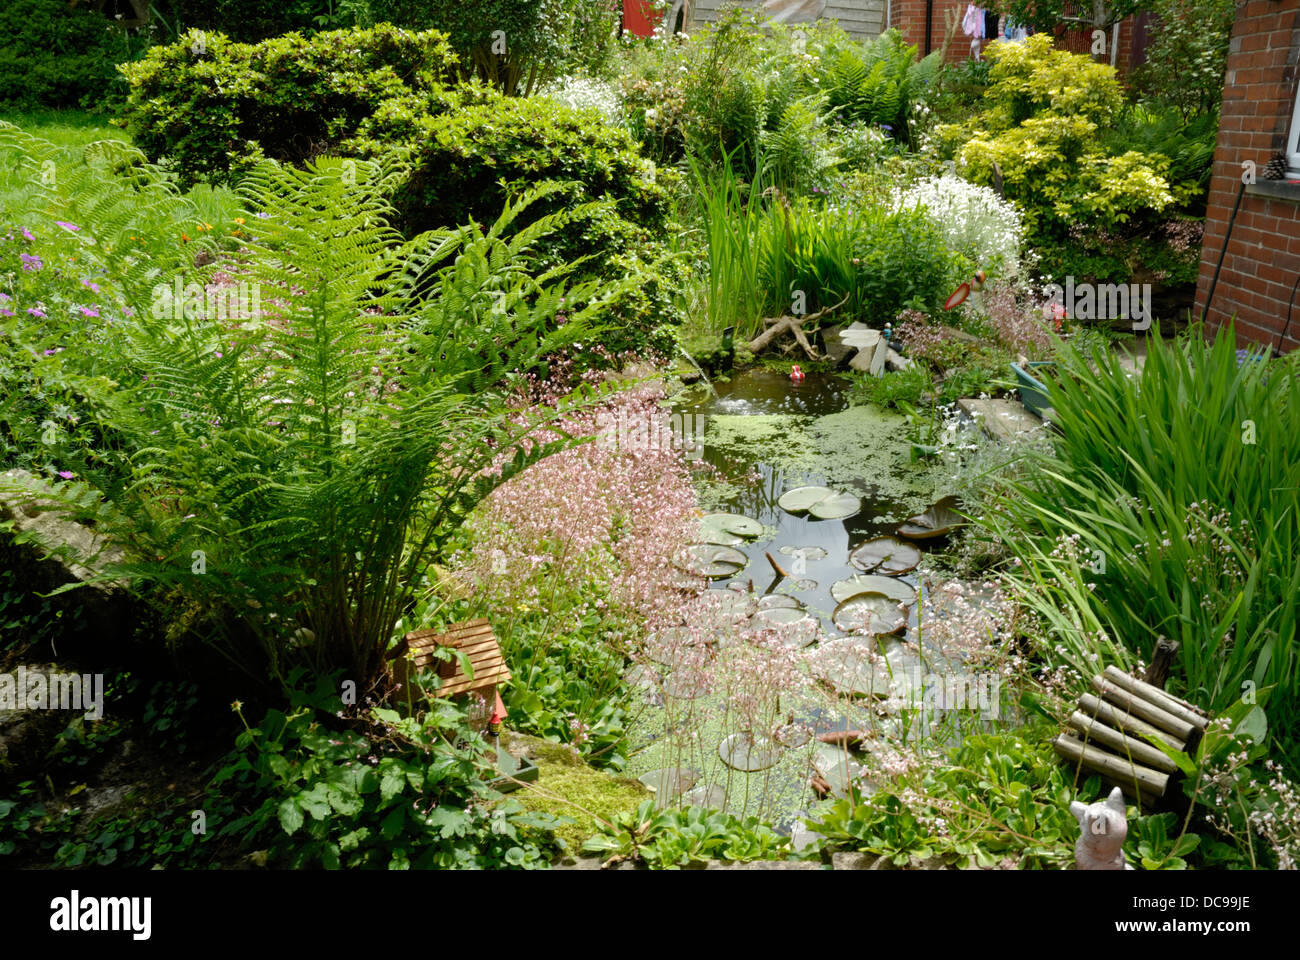 Garden Fern in natural surrounding Stock Photo